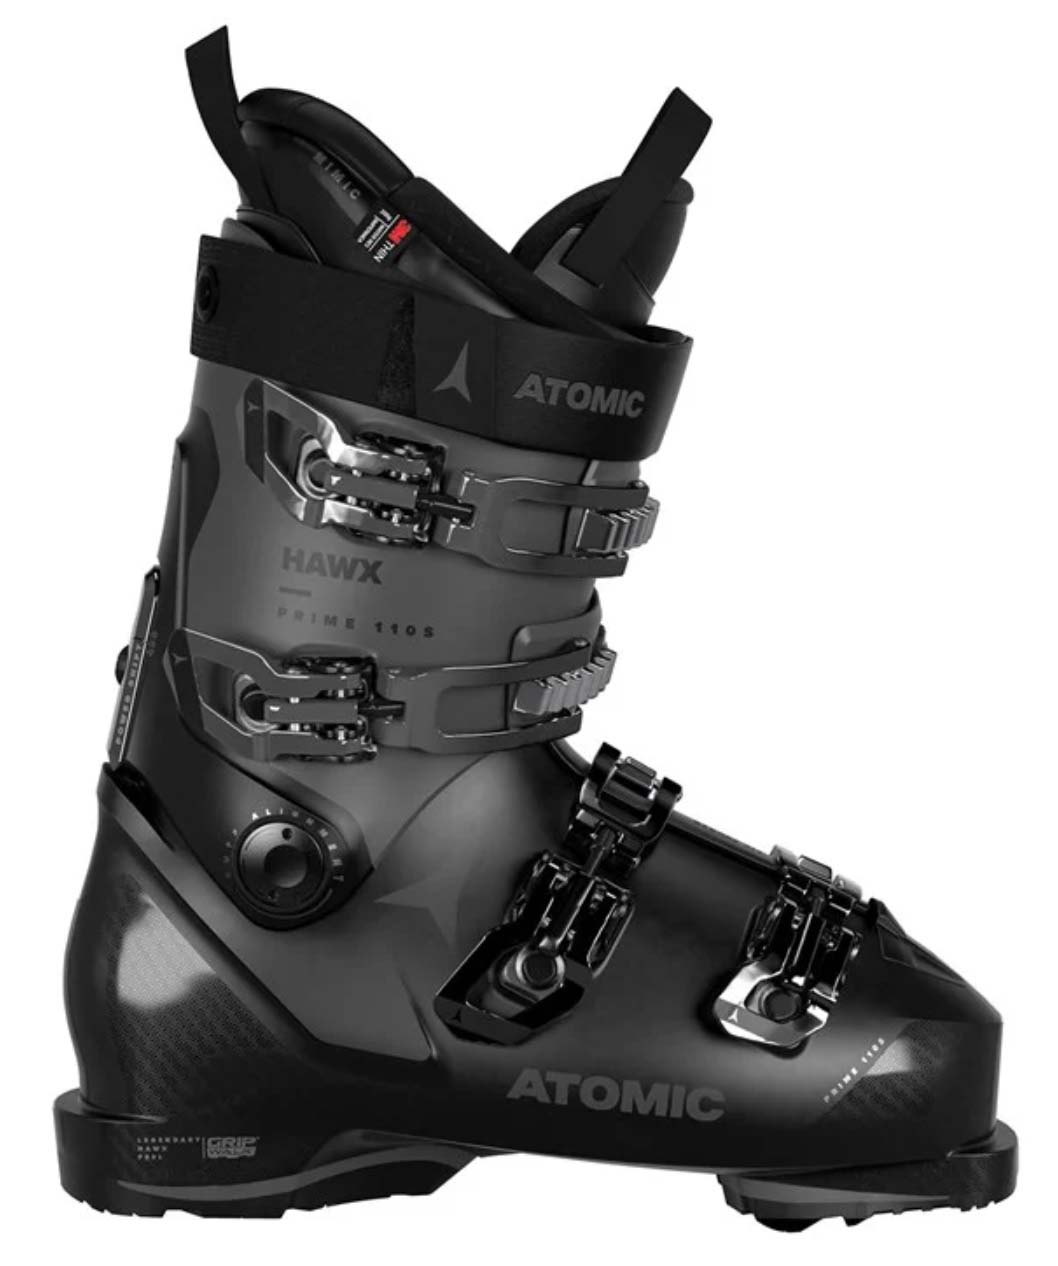 Atomic Hawx Prime 110 S GW ski boots